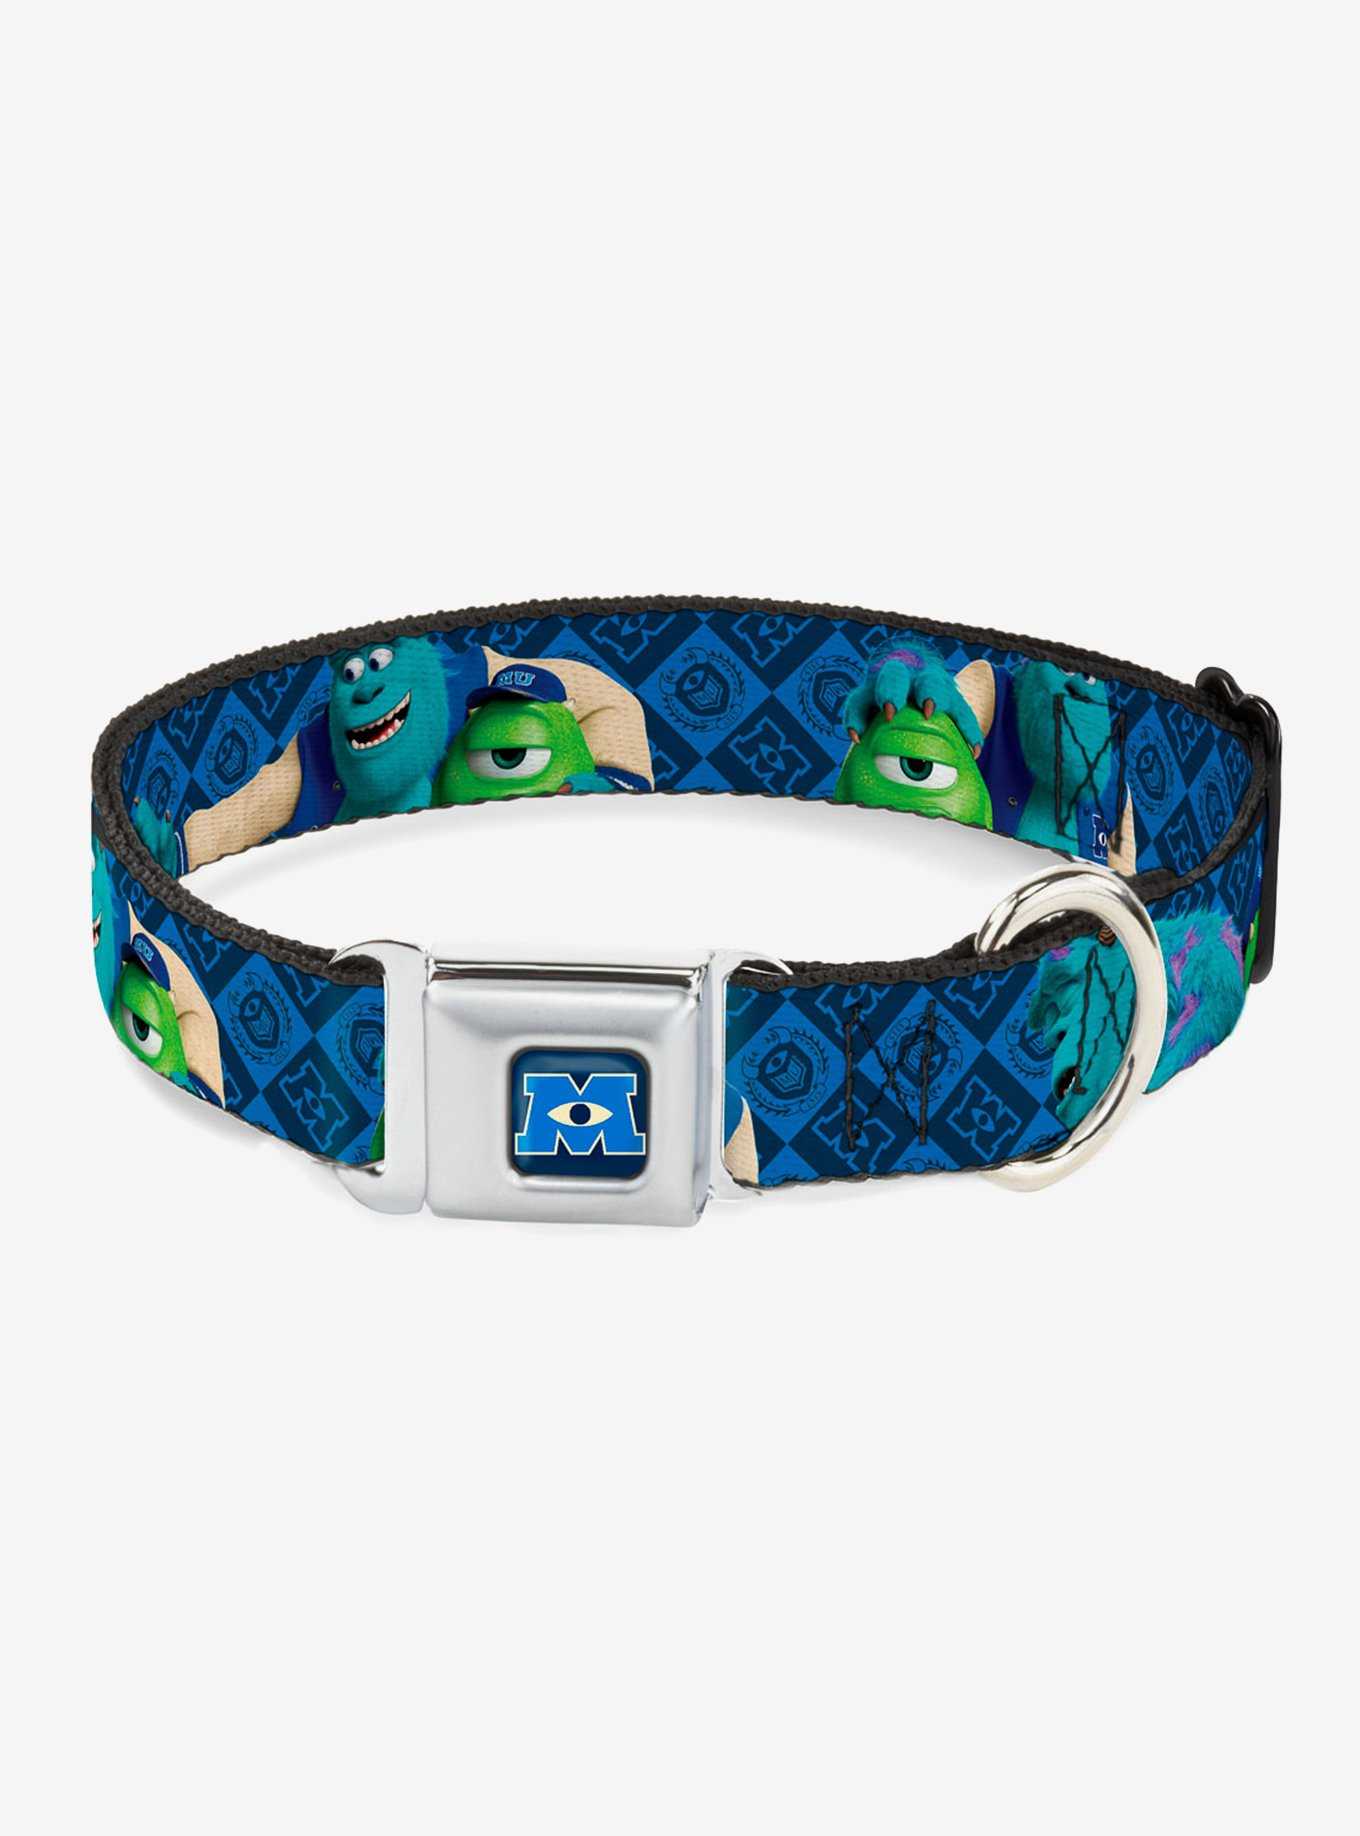 Disney Pixar Monsters University Sulley Mike Poses Seatbelt Buckle Dog Collar, , hi-res